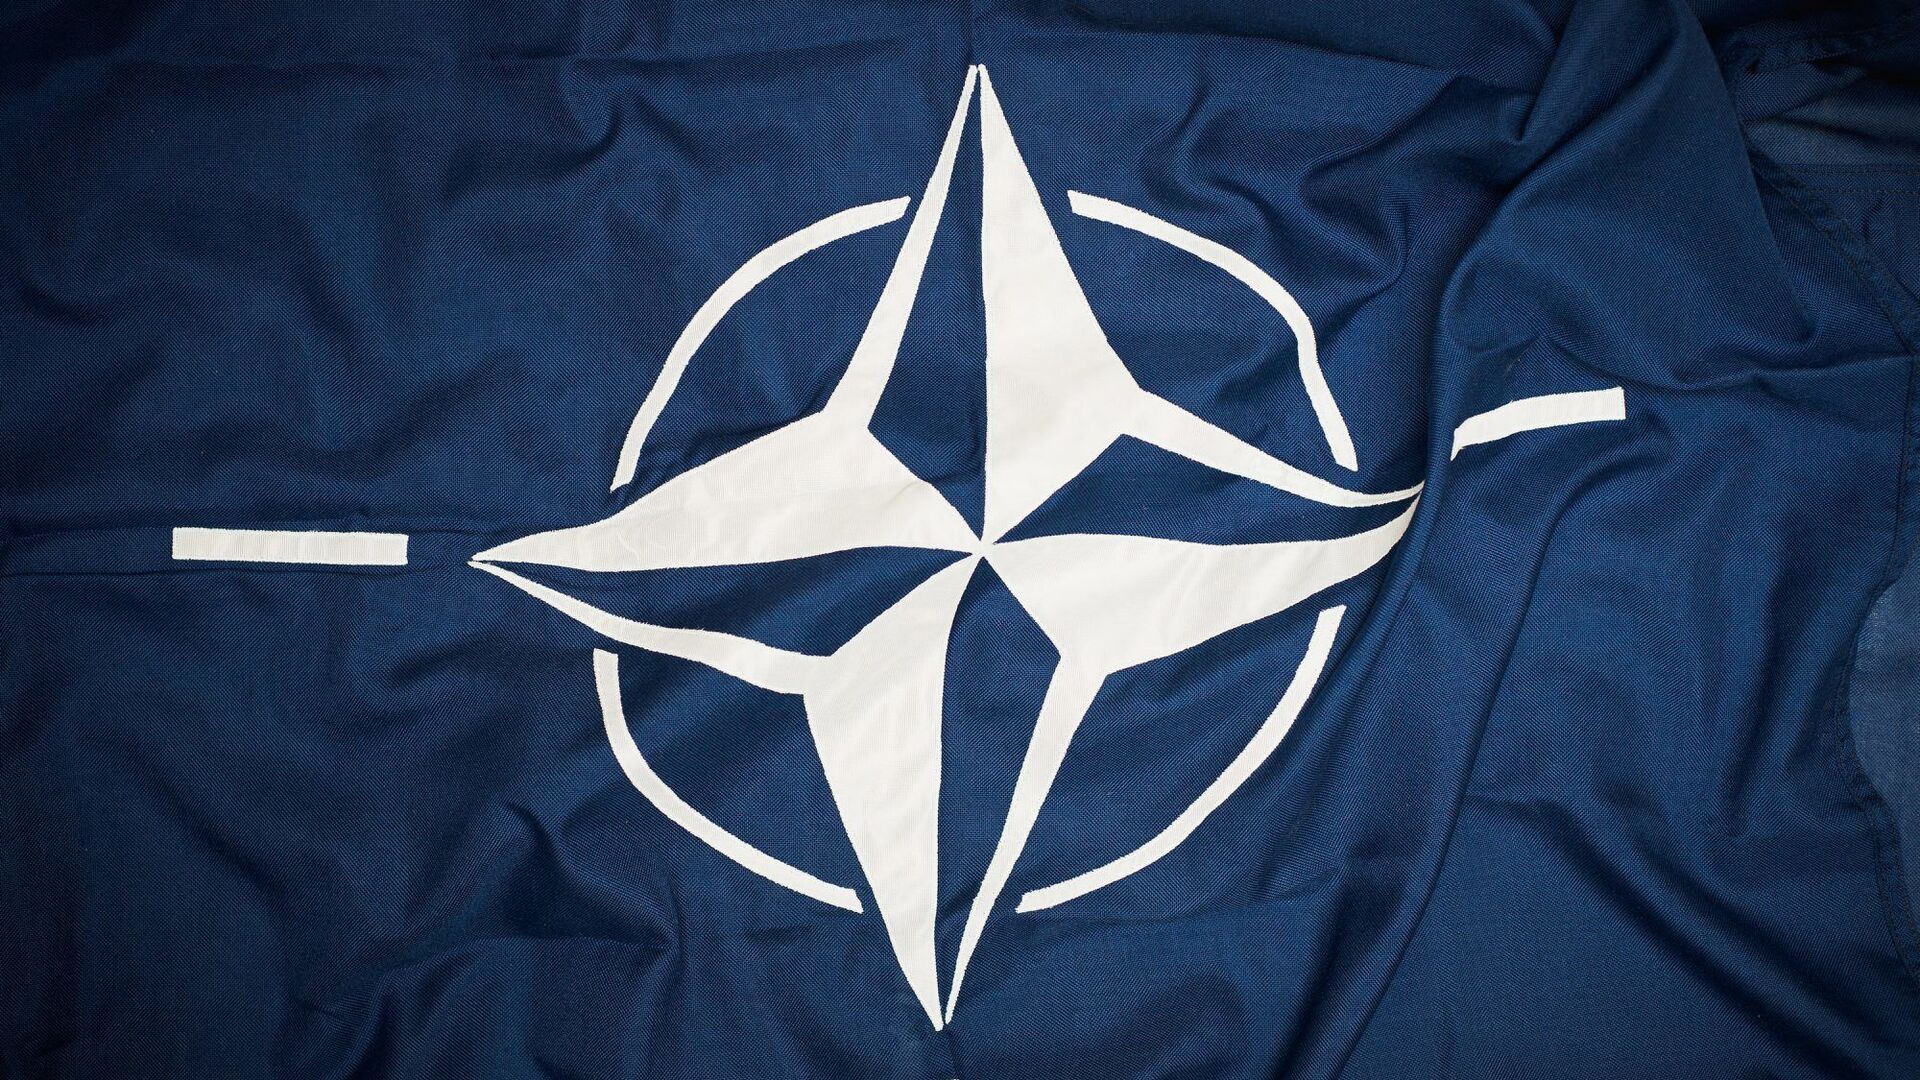 NATOは協力と安全のためではなく、対立のために存在している＝ペスコフ大統領報道官 - Sputnik 日本, 1920, 29.03.2022